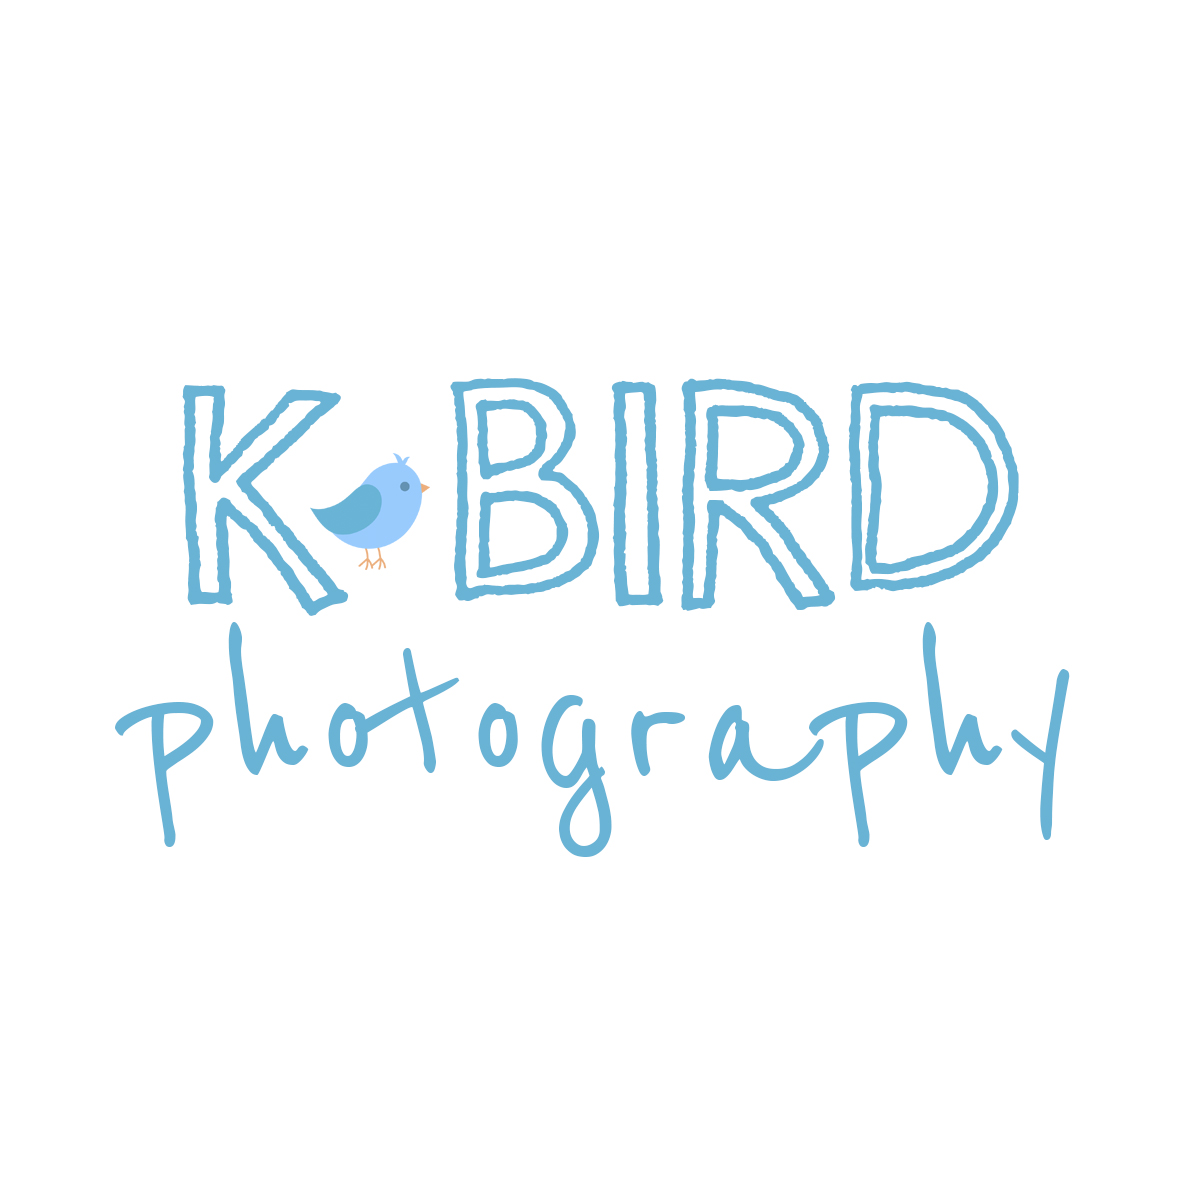 KBird Photography